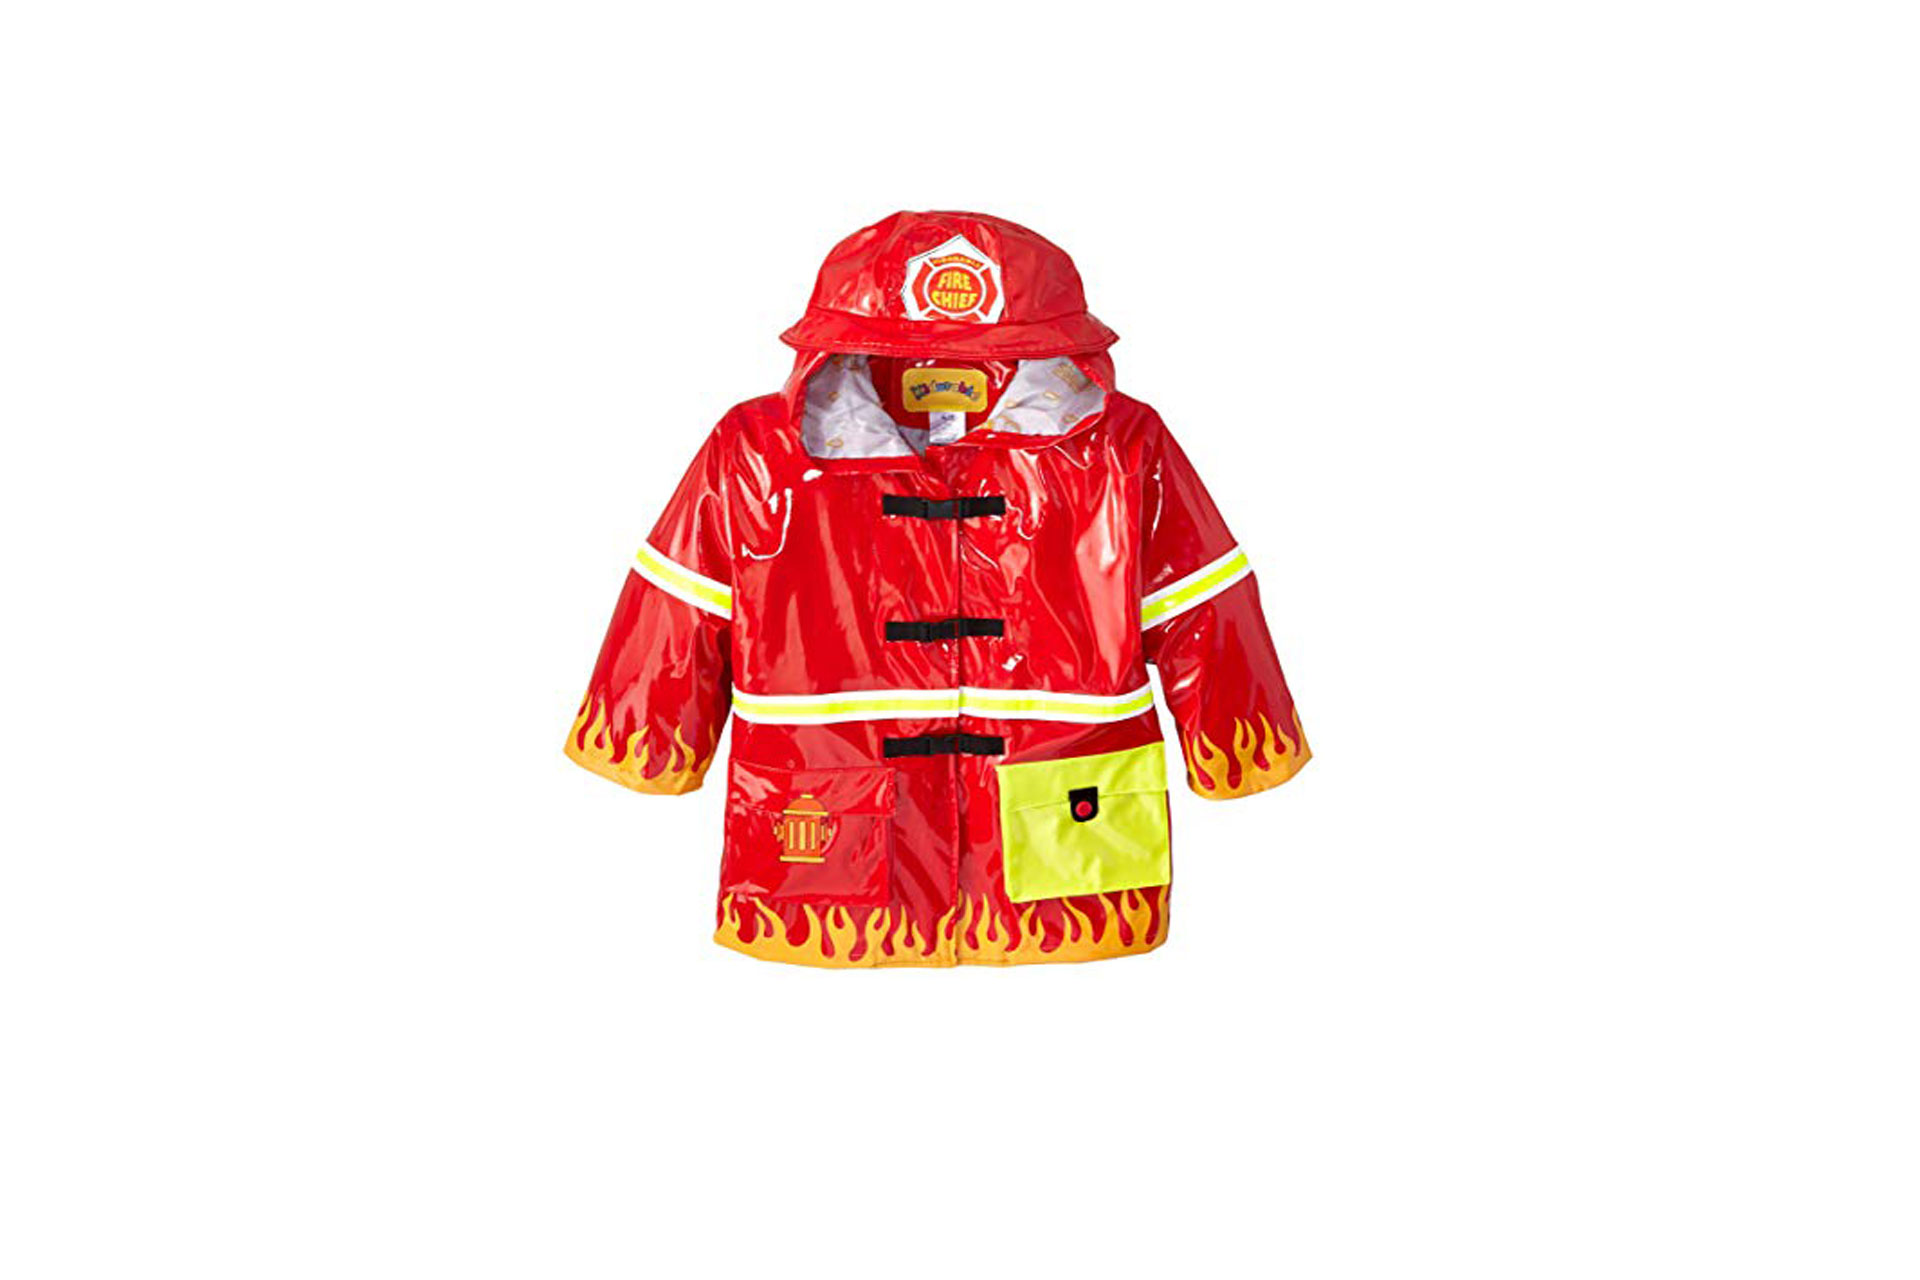 Fireman Rain Jacket; Courtesy of Amazon